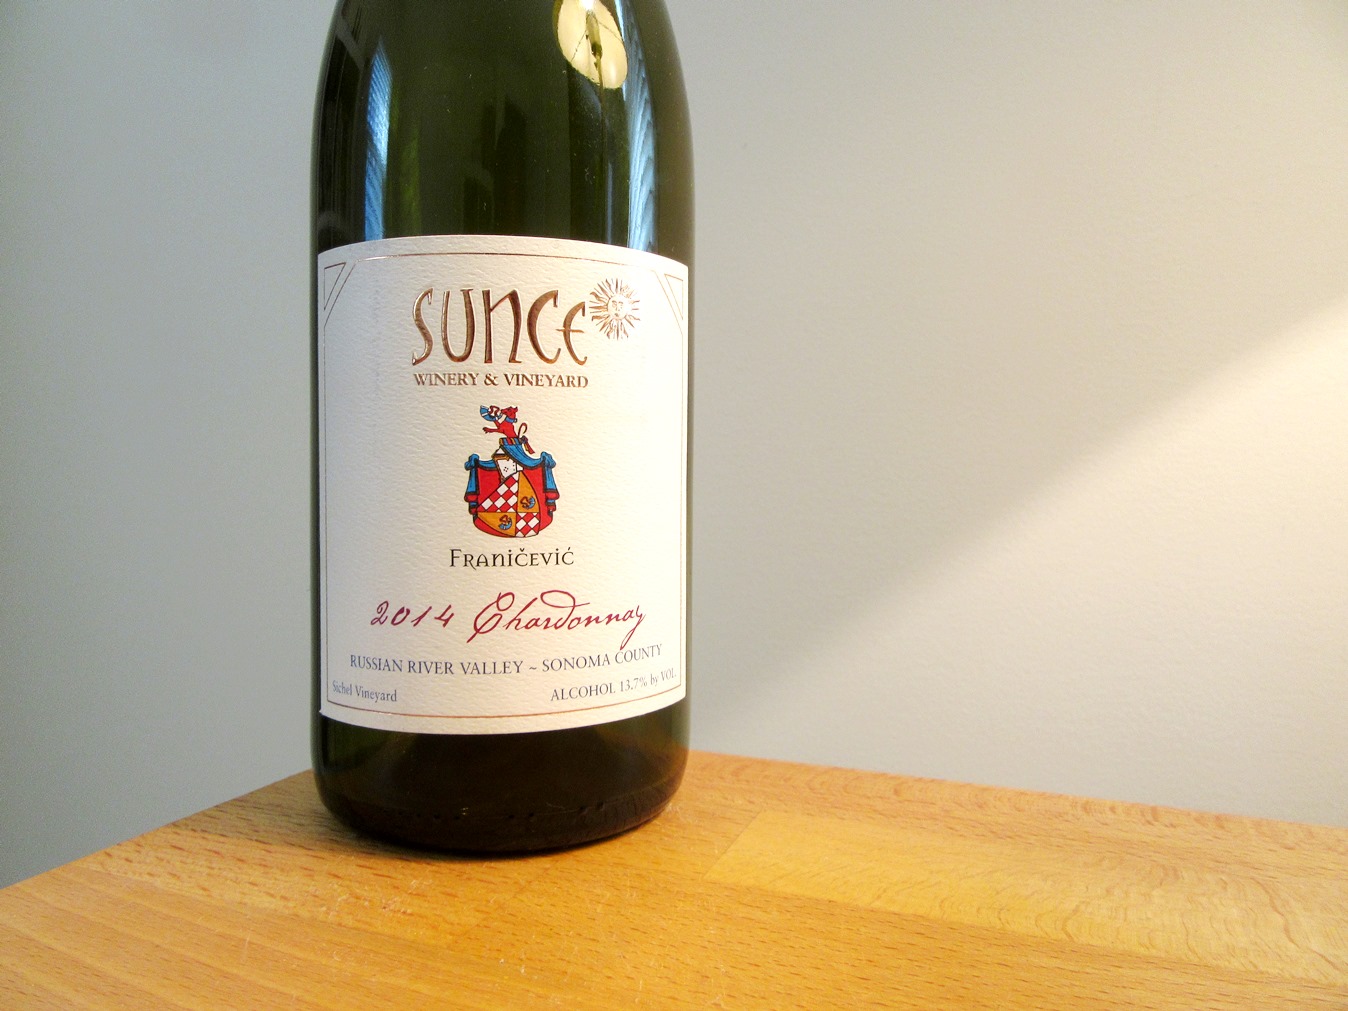 Sunce Winery & Vineyard, Chardonnay 2014, Sichel Vineyard, Russian River, Sonoma County, California, Wine Casual